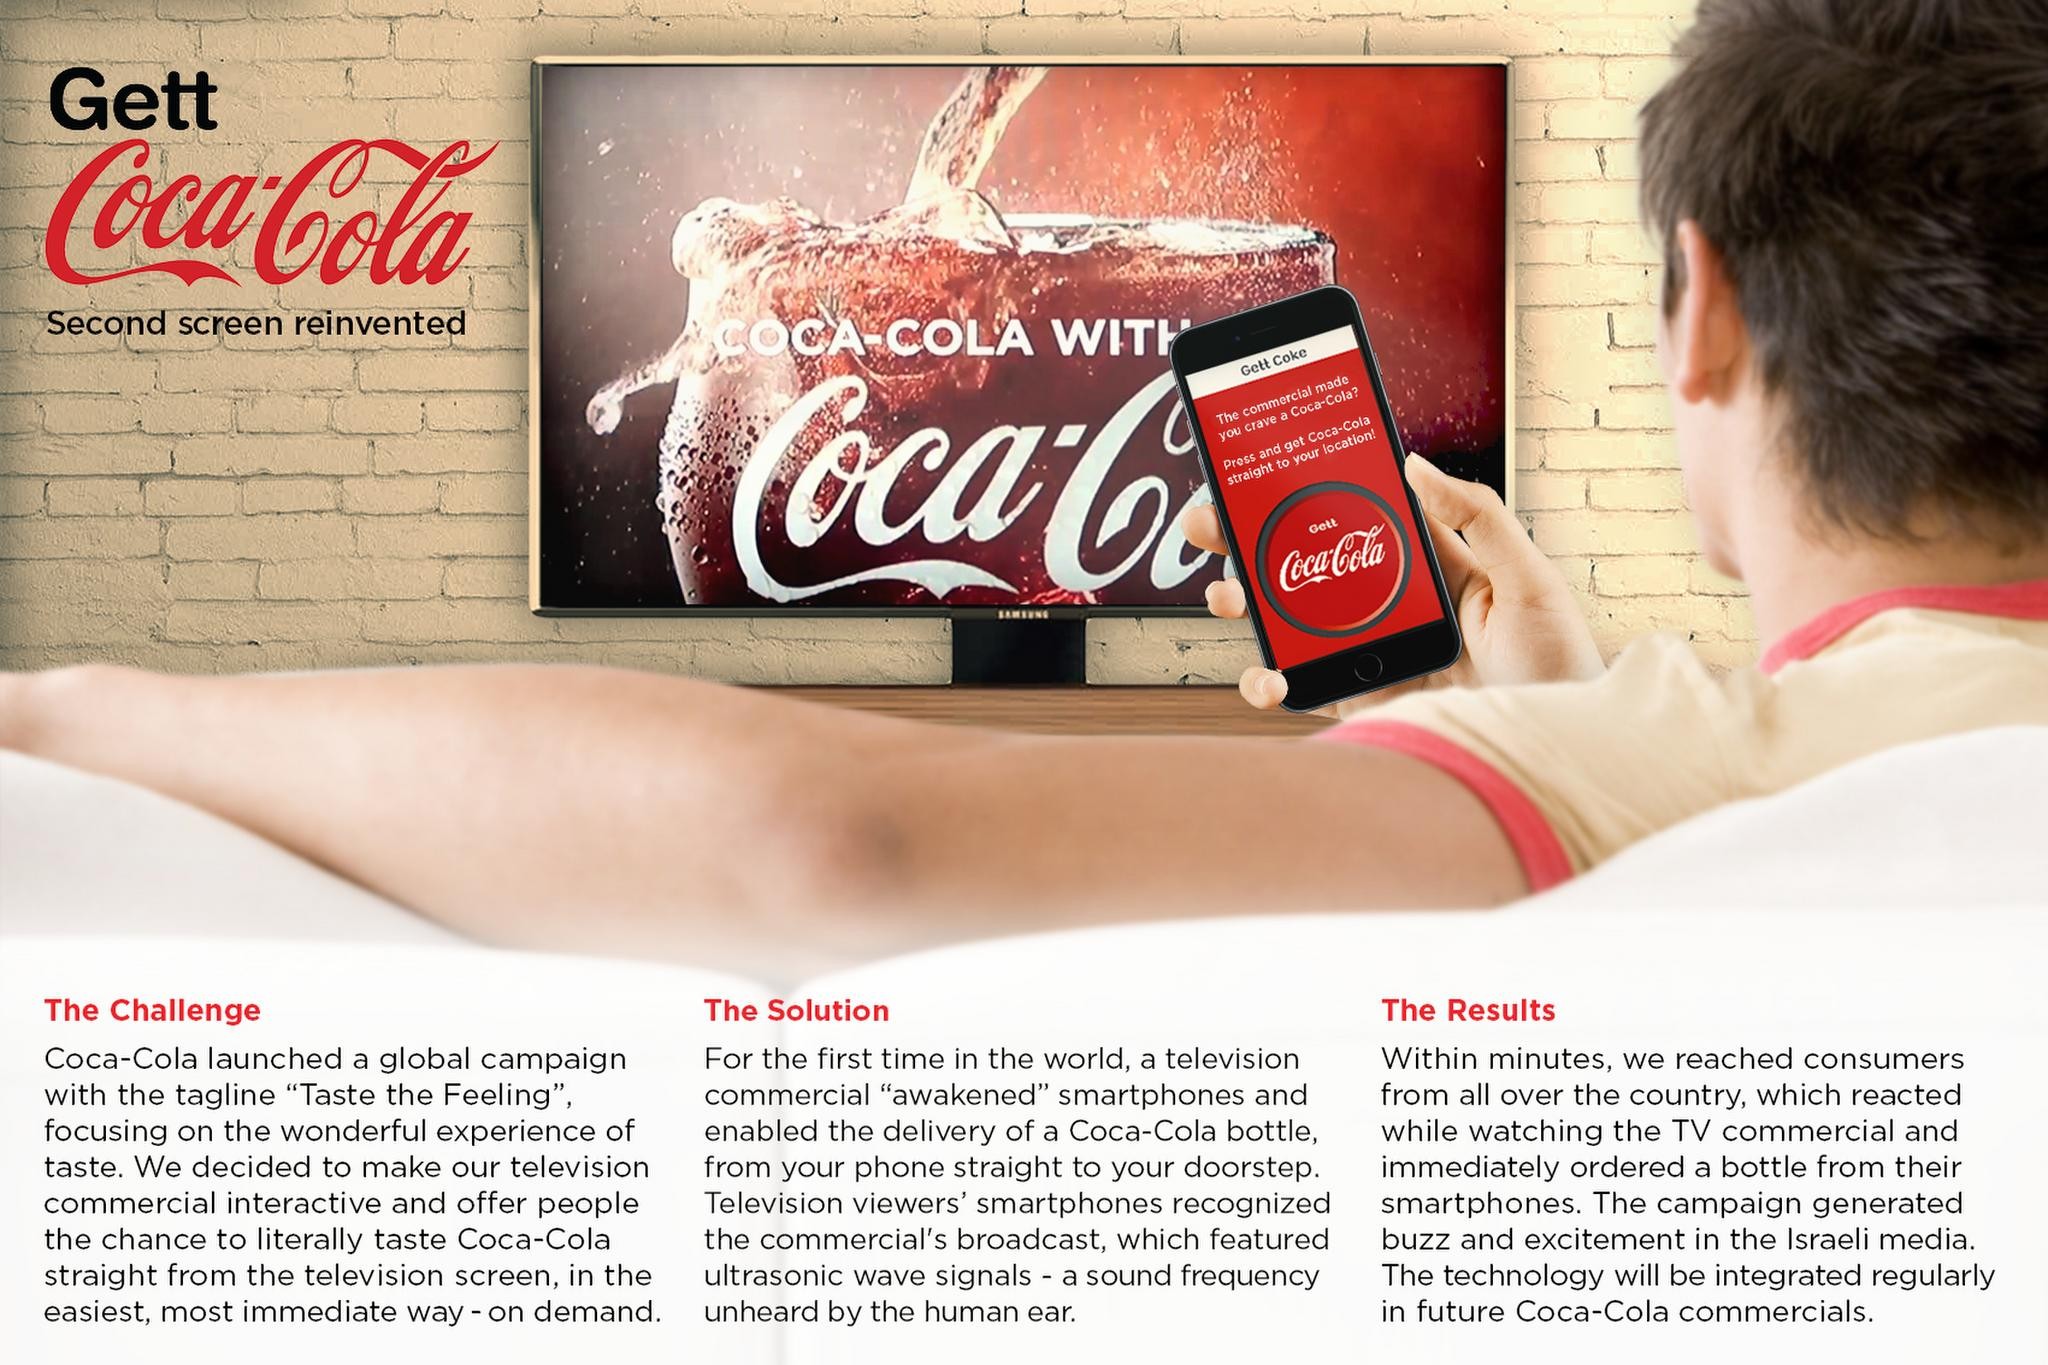 Gett Coca-Cola- Second screen reinvented